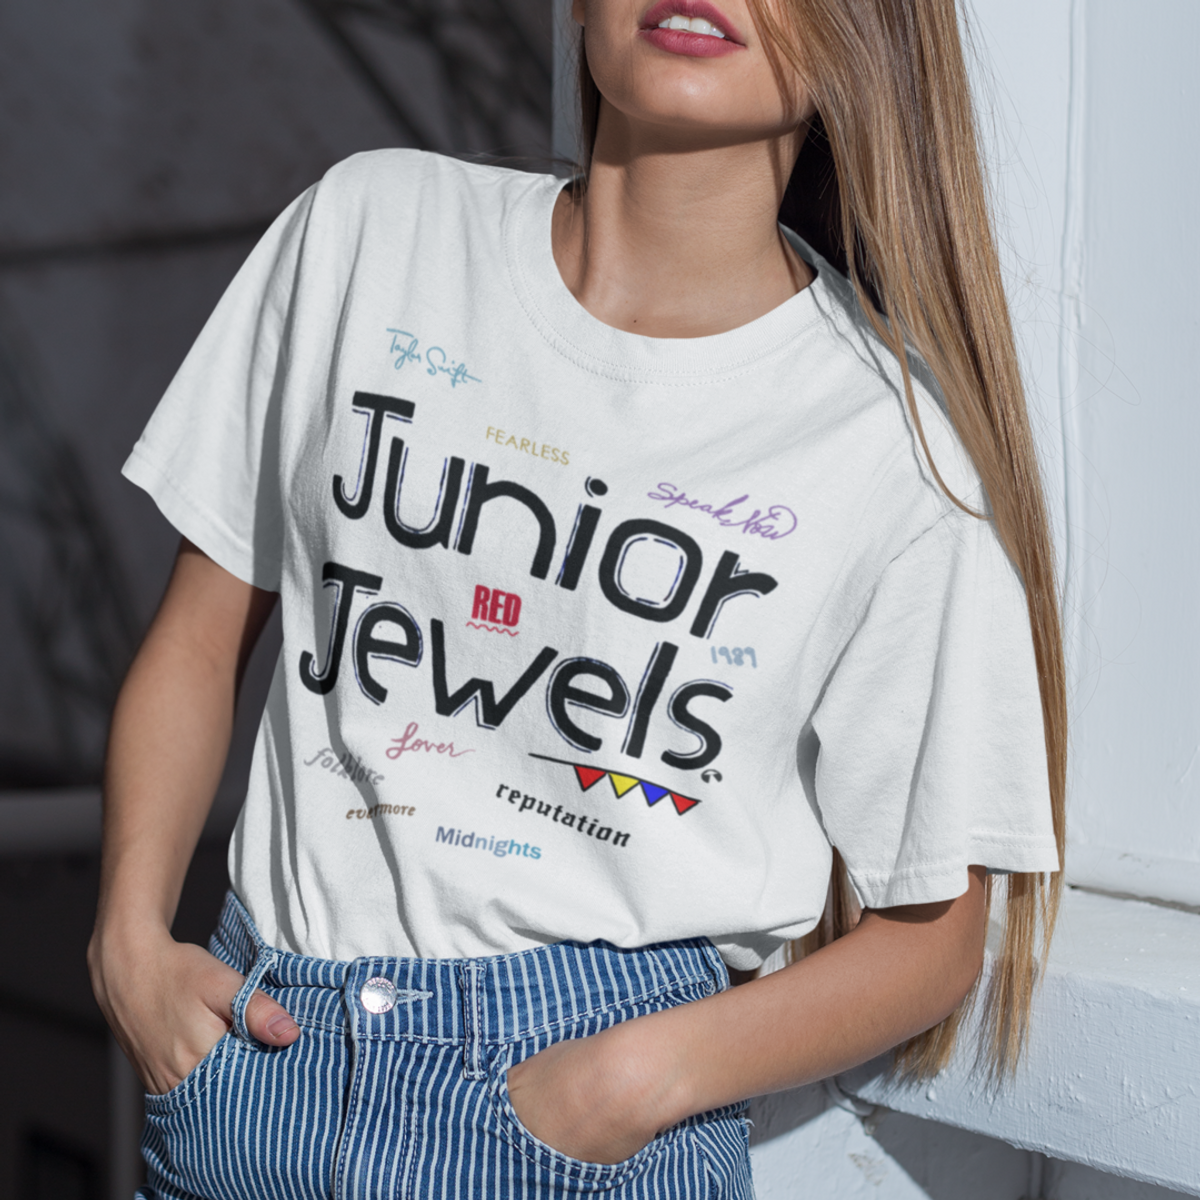 Nome do produto: Junior Jewels - Taylor Swift